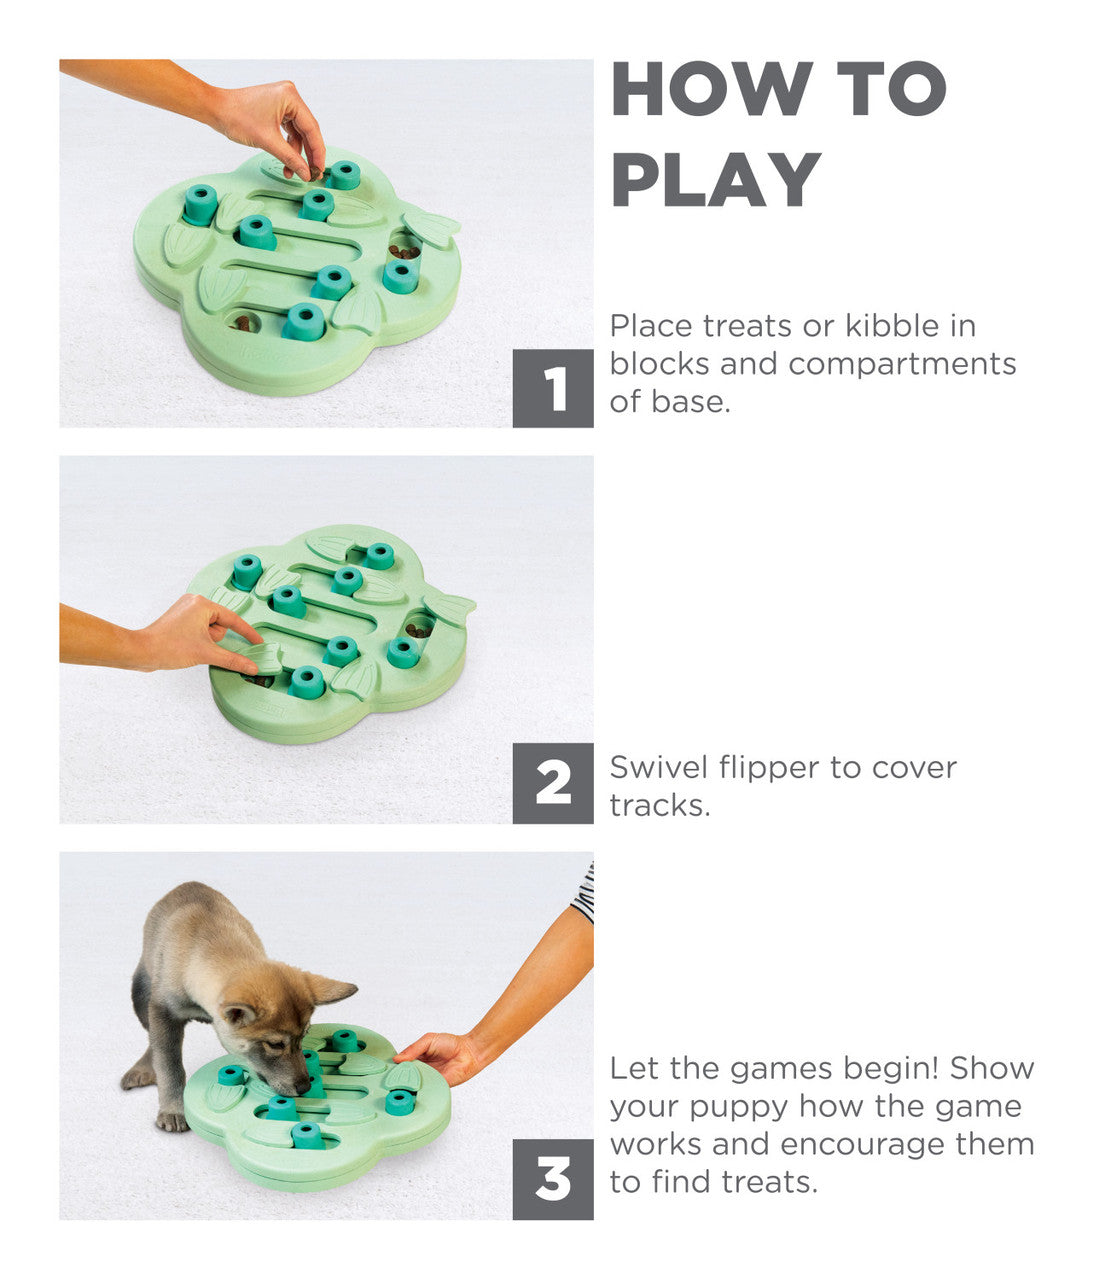 Pet Supplies : Outward Hound Nina Ottosson Dog Hide N' Slide Tan  Interactive Treat Puzzle Dog Toy 